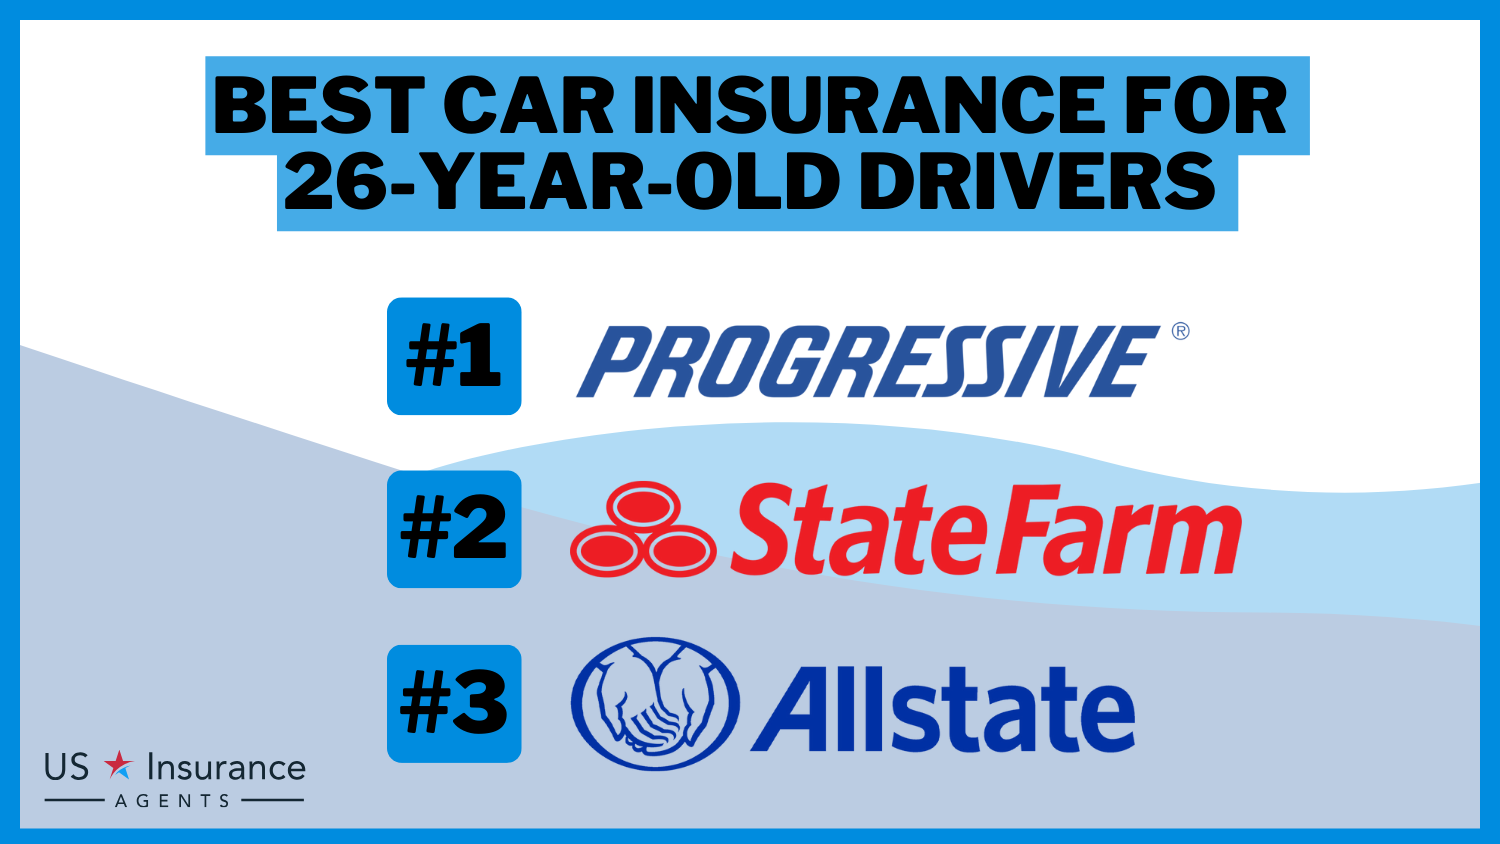 Best Car Insurance For 26-Year-Old Drivers: Progressive, StateFarm, Allstate